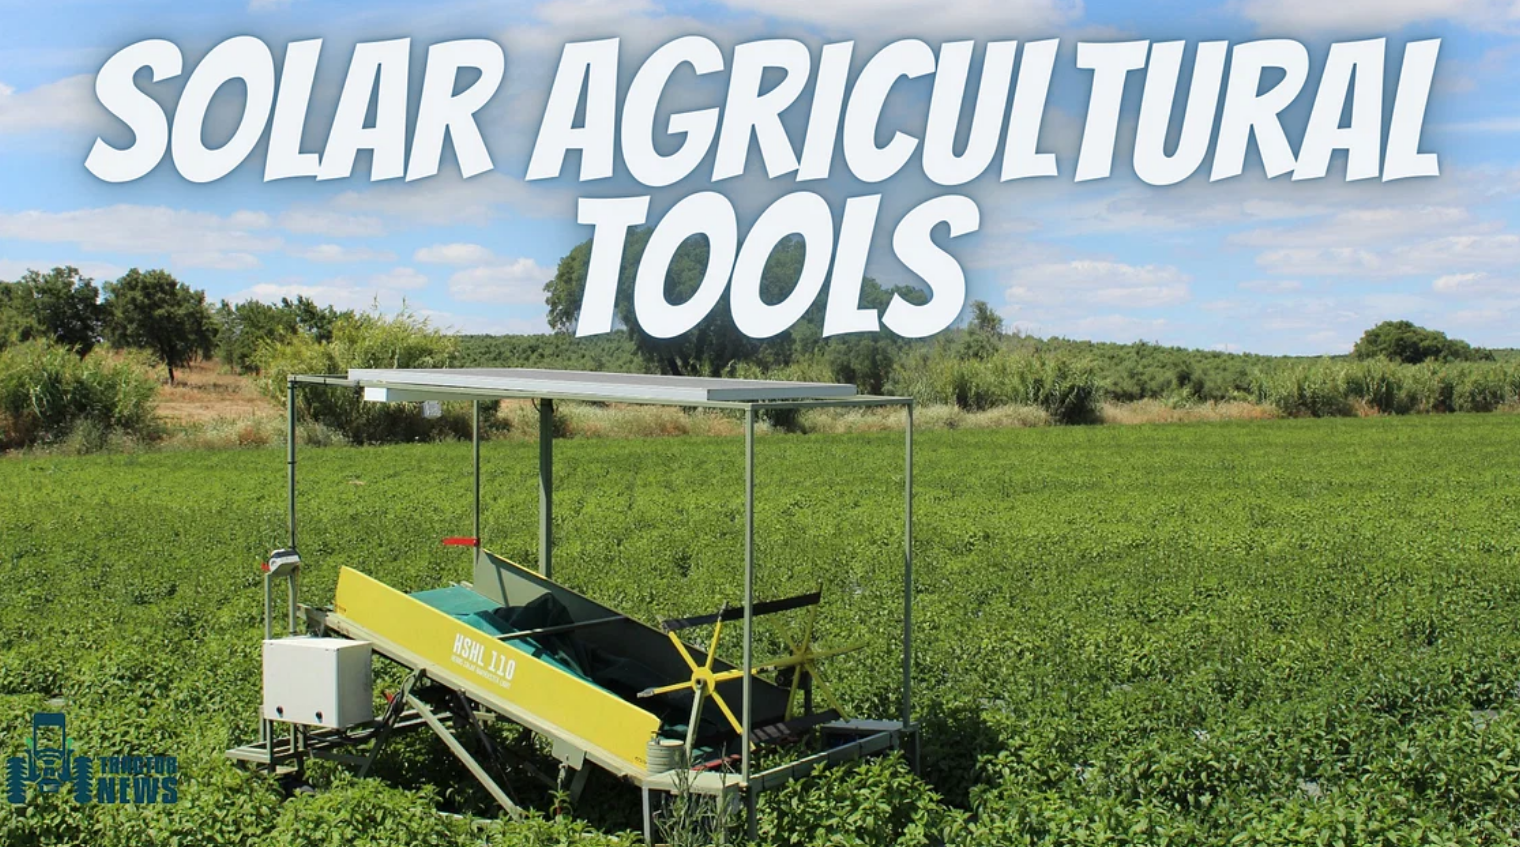 Solar Agricultural tools